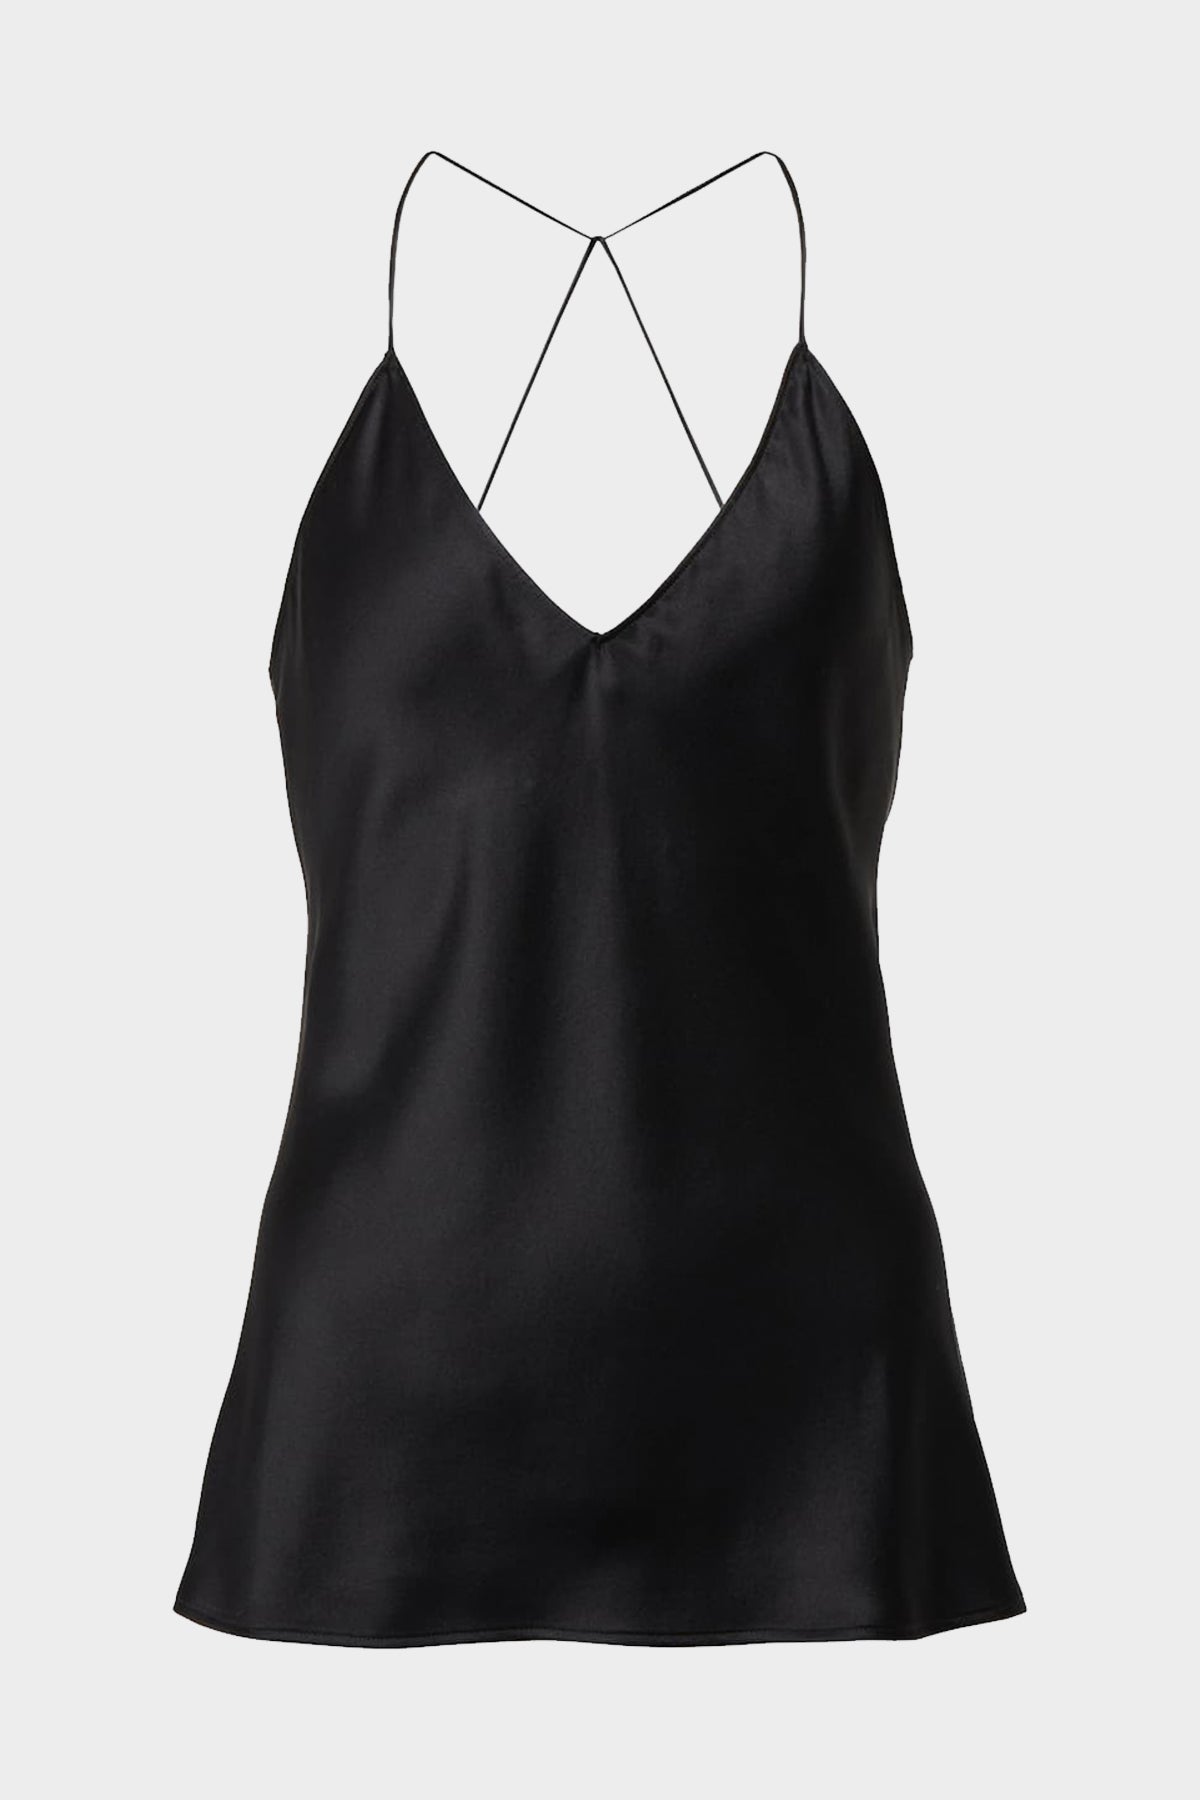 Desiree Silk Cami Top in Black - shop-olivia.com